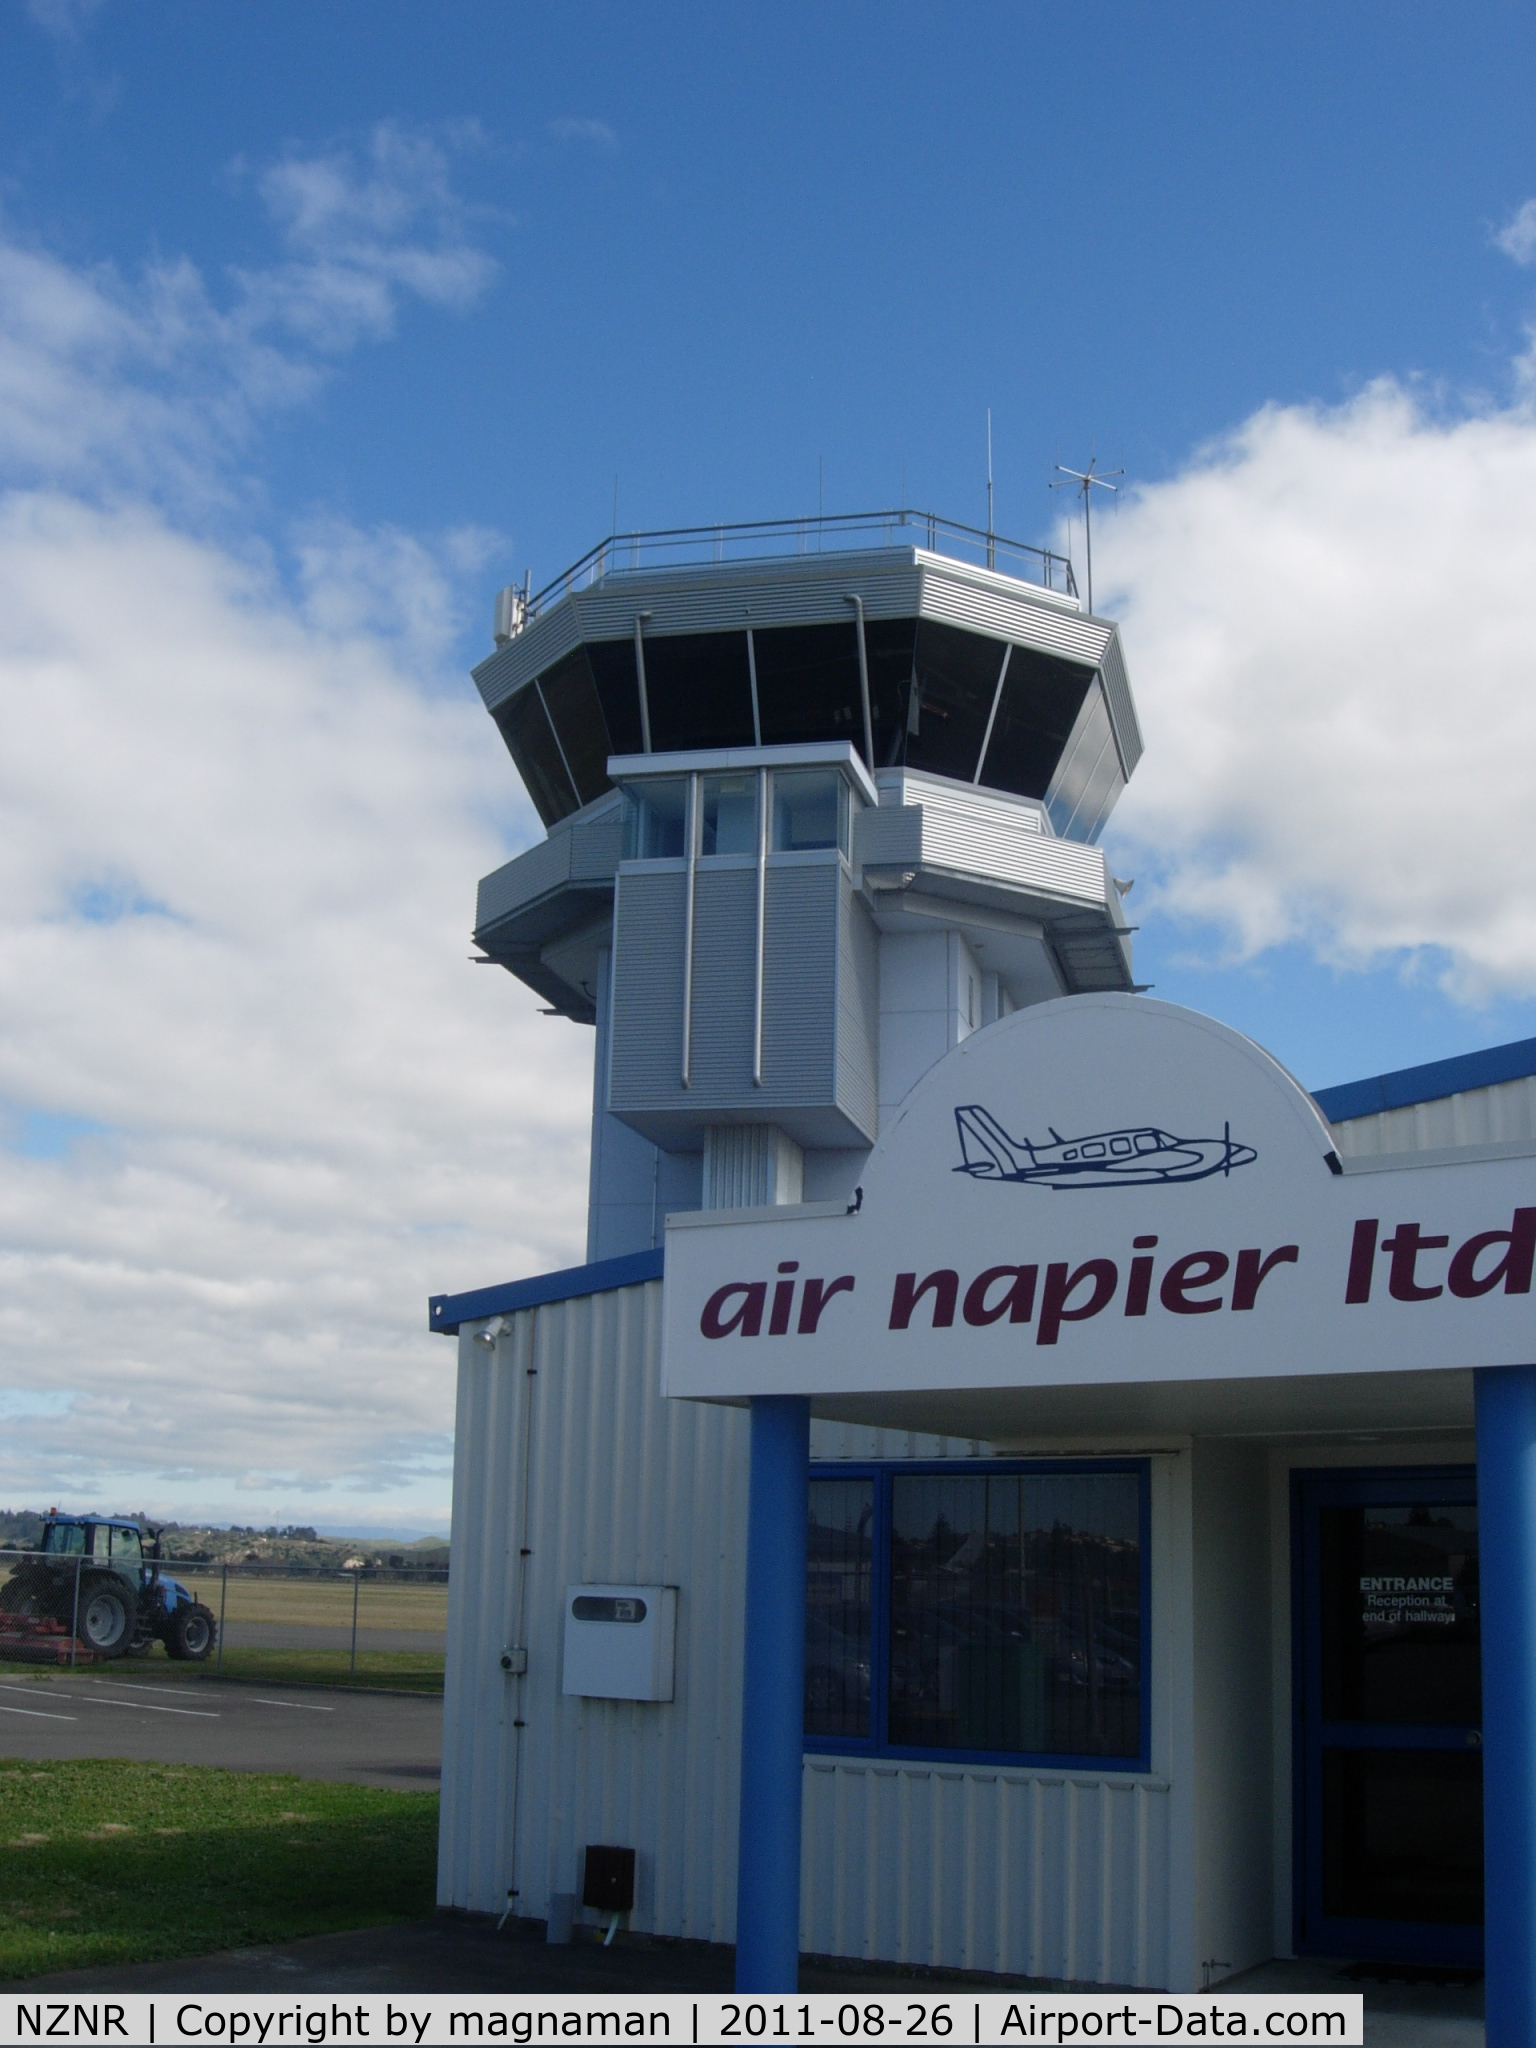 Napier Airport, Napier New Zealand (NZNR) - Tower at Napier